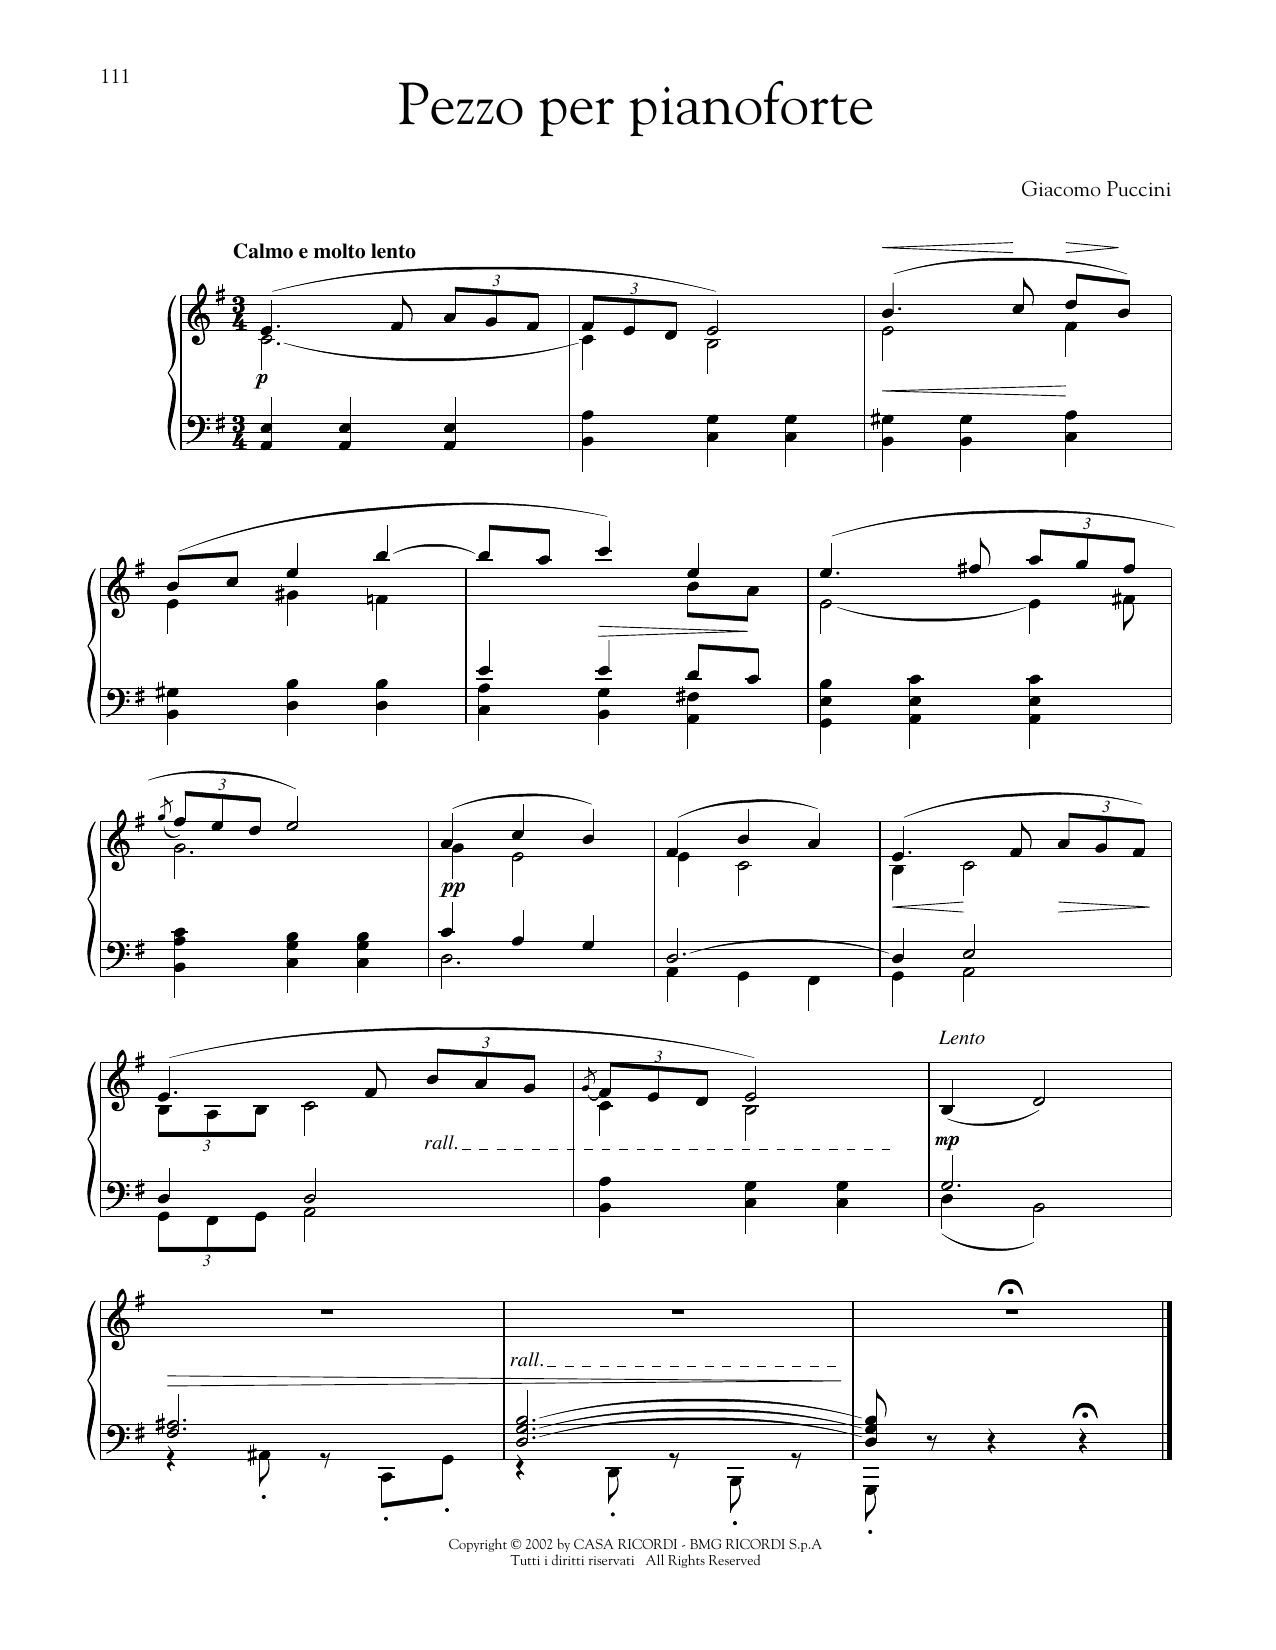 Giacomo Puccini Pezzo per pianoforte (Piano Piece) sheet music notes and chords arranged for Piano Solo